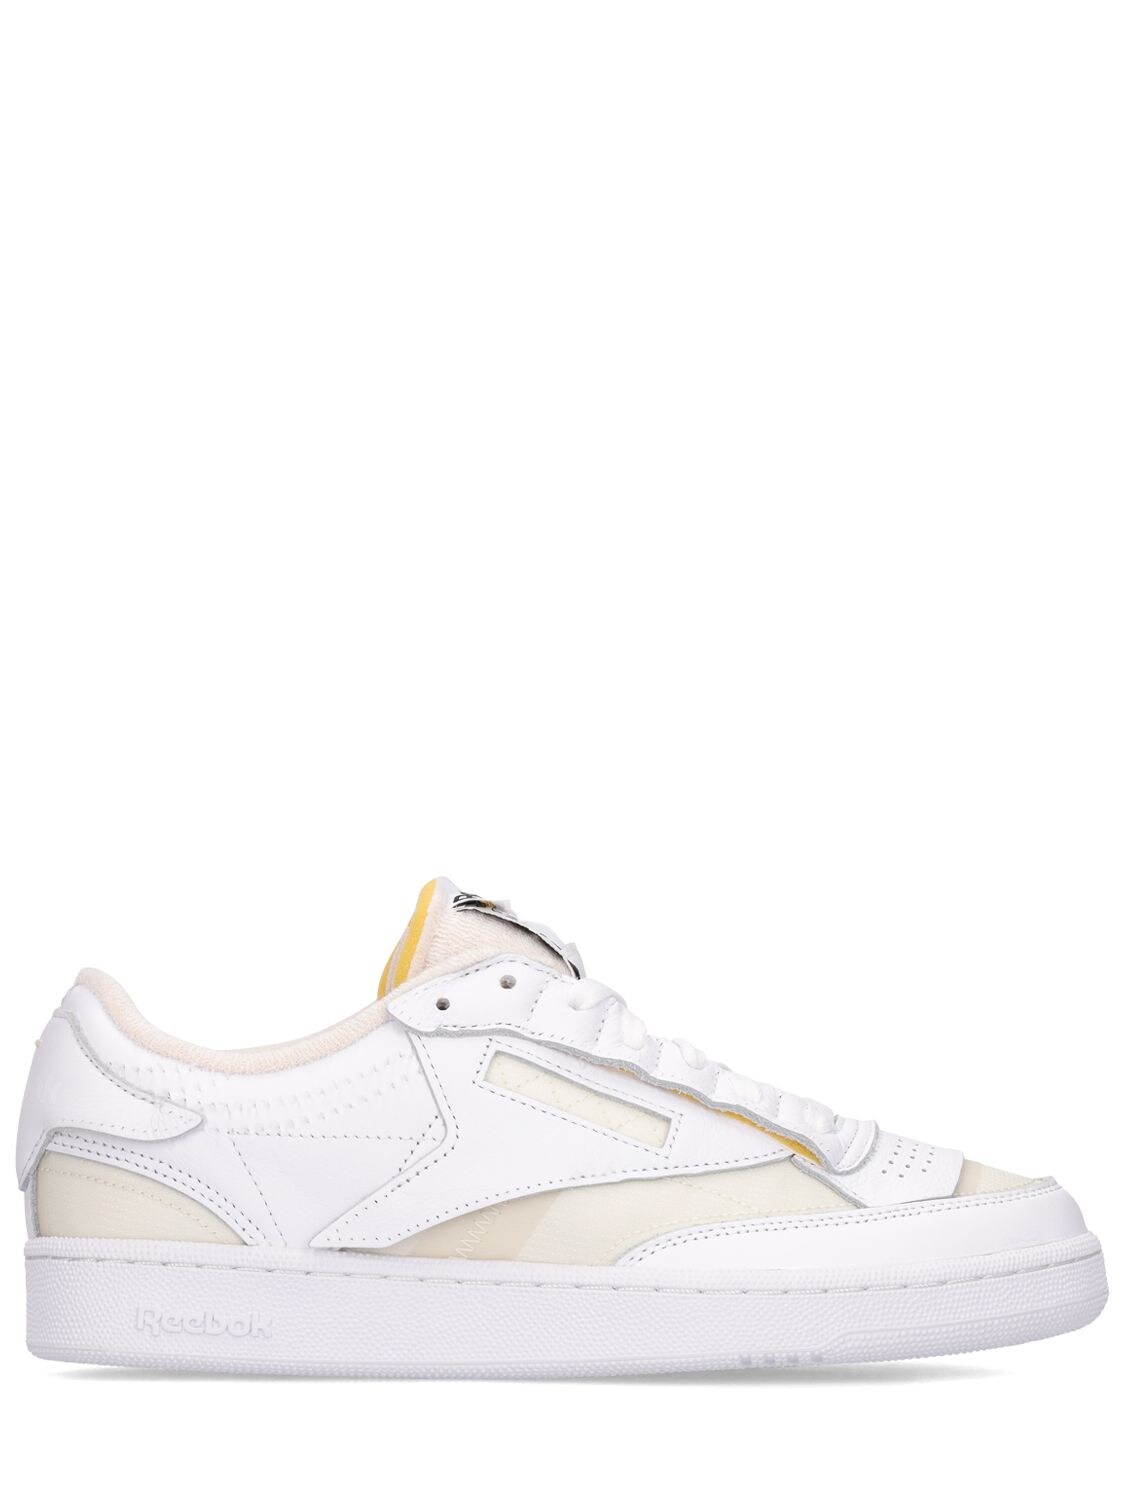 Maison Margiela 20mm Reebok Leather & Nylon Sneakers In White